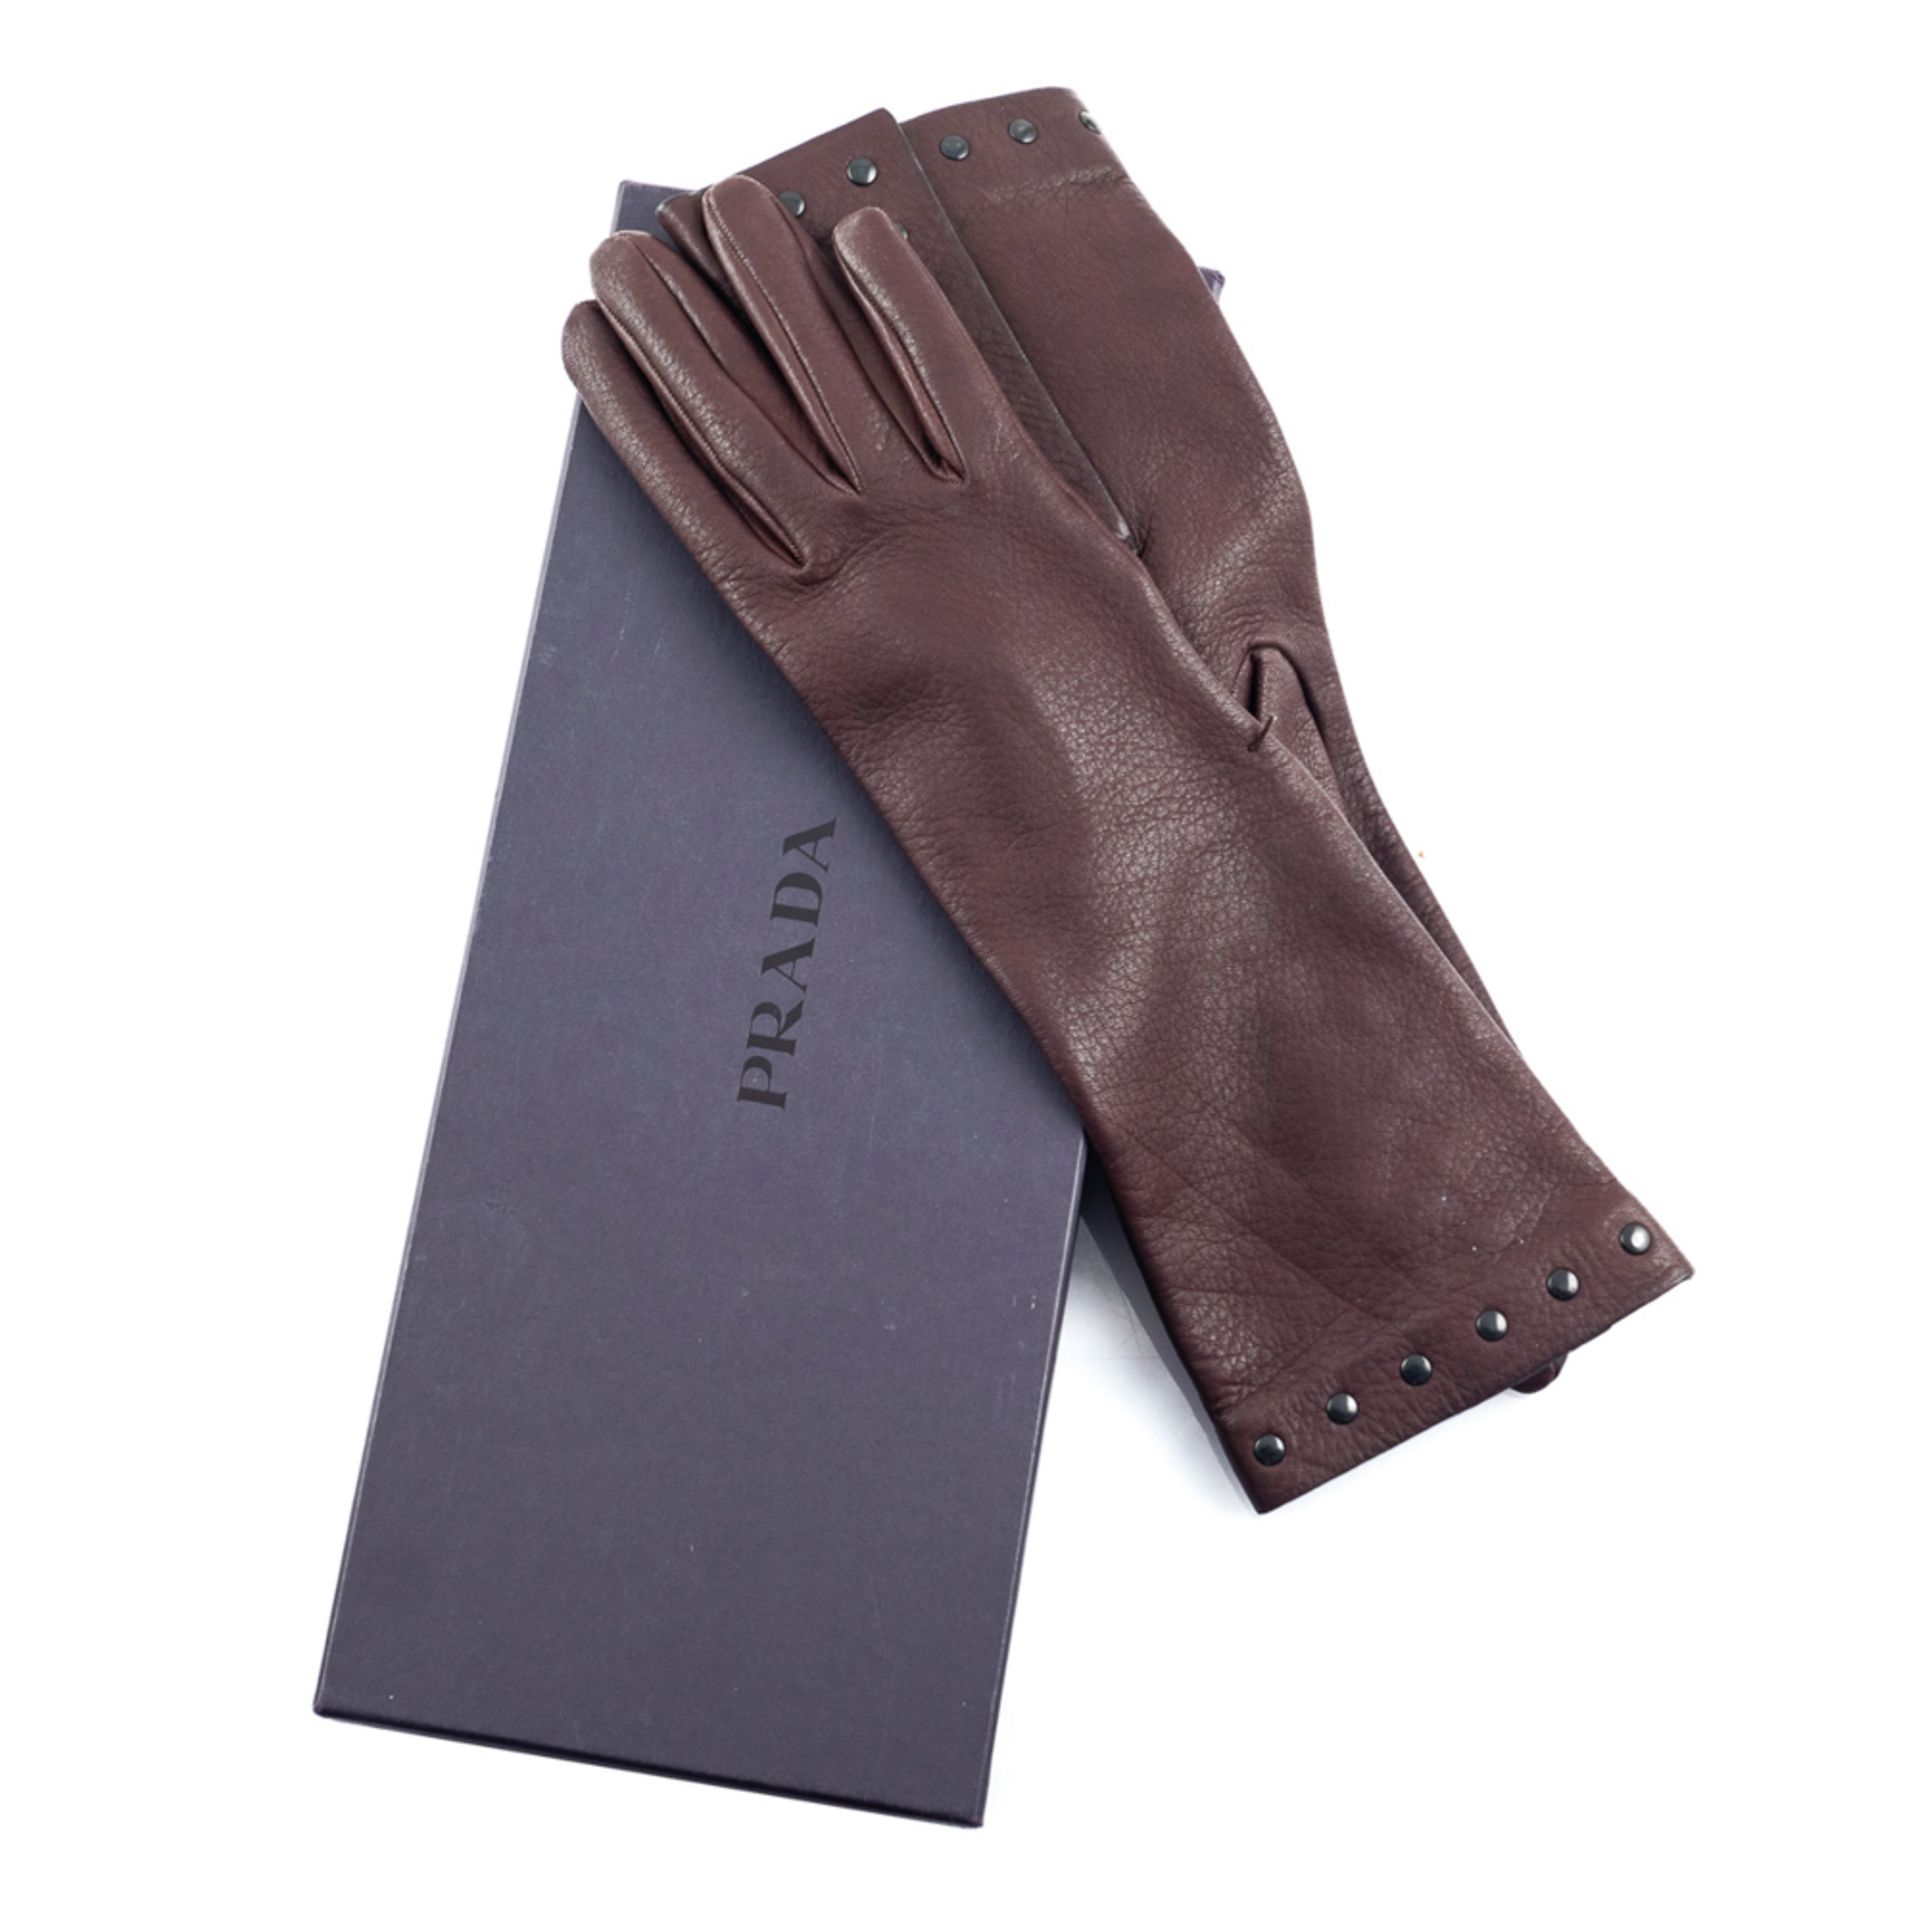 Miu Miu Gruppo Prada, vintage gloves size 7 - Image 2 of 2